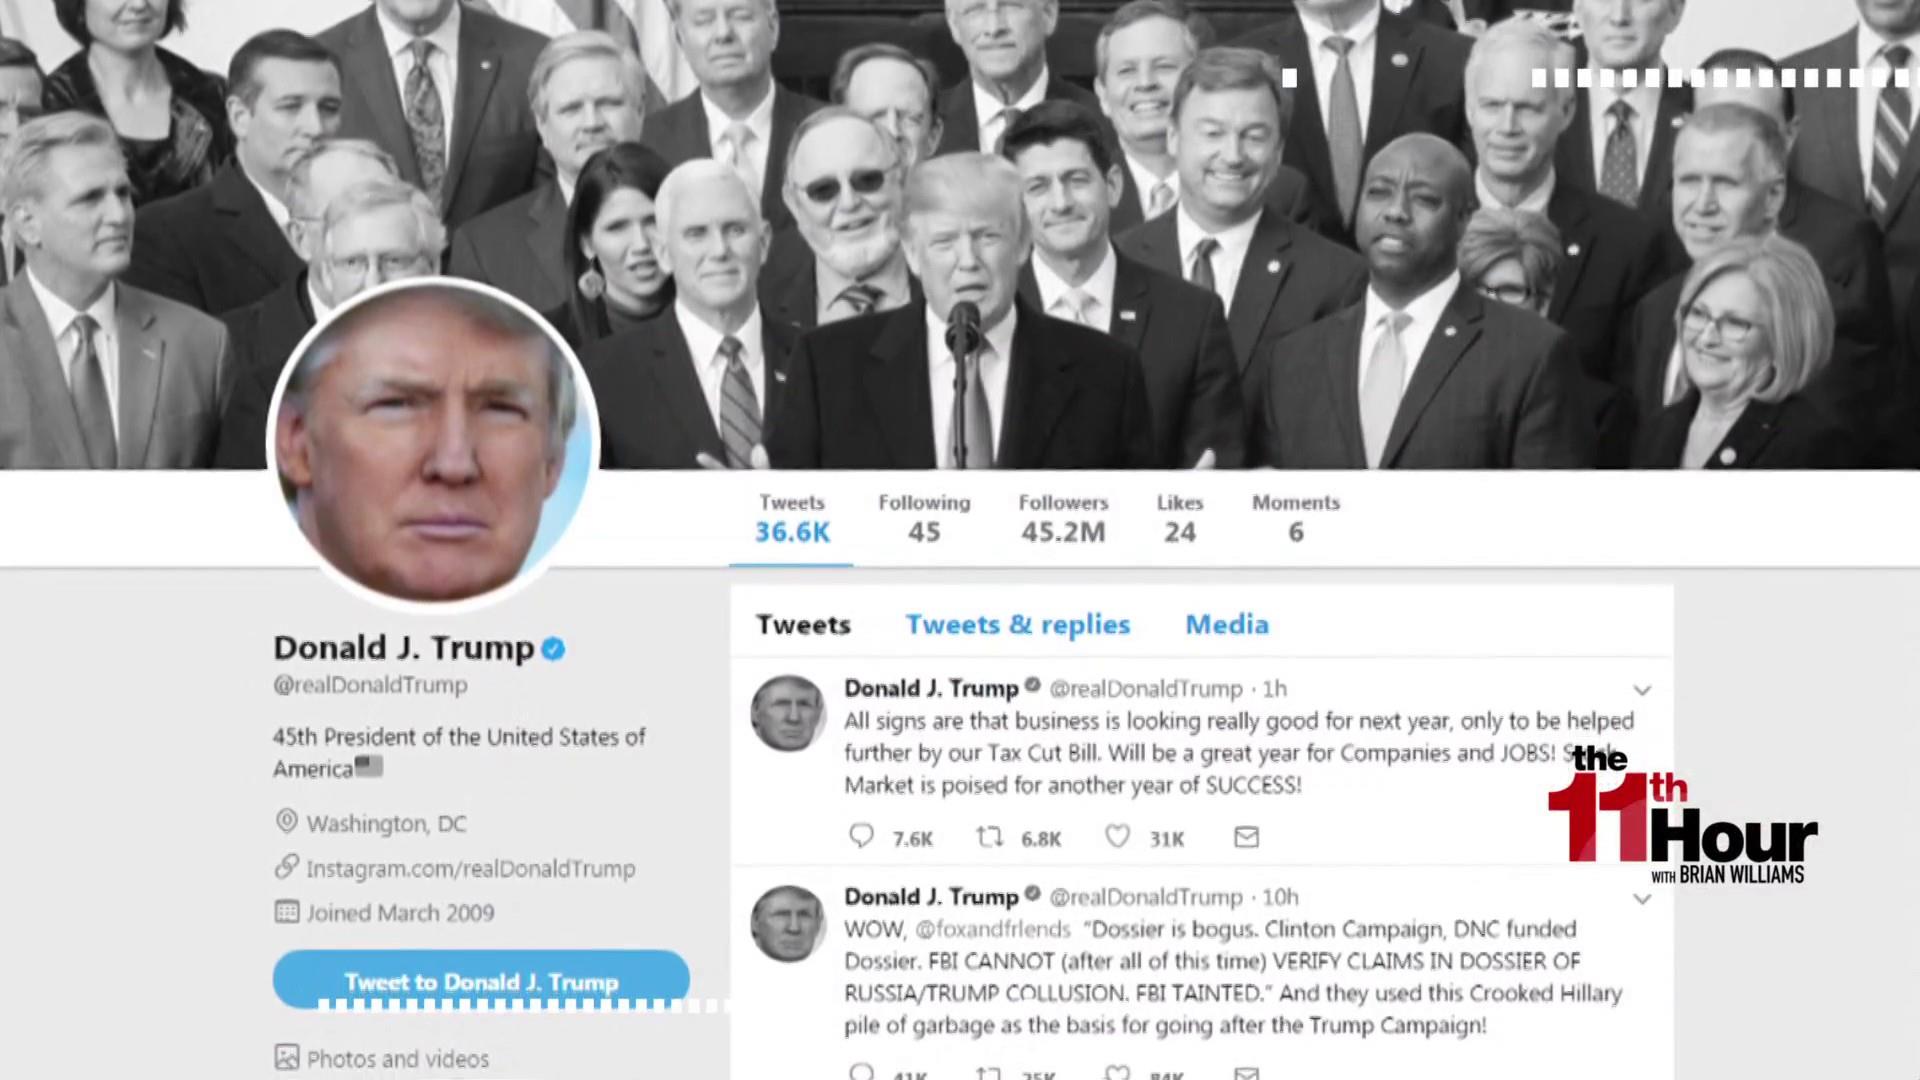 Possible Trump's spent 40 hours tweeting as president